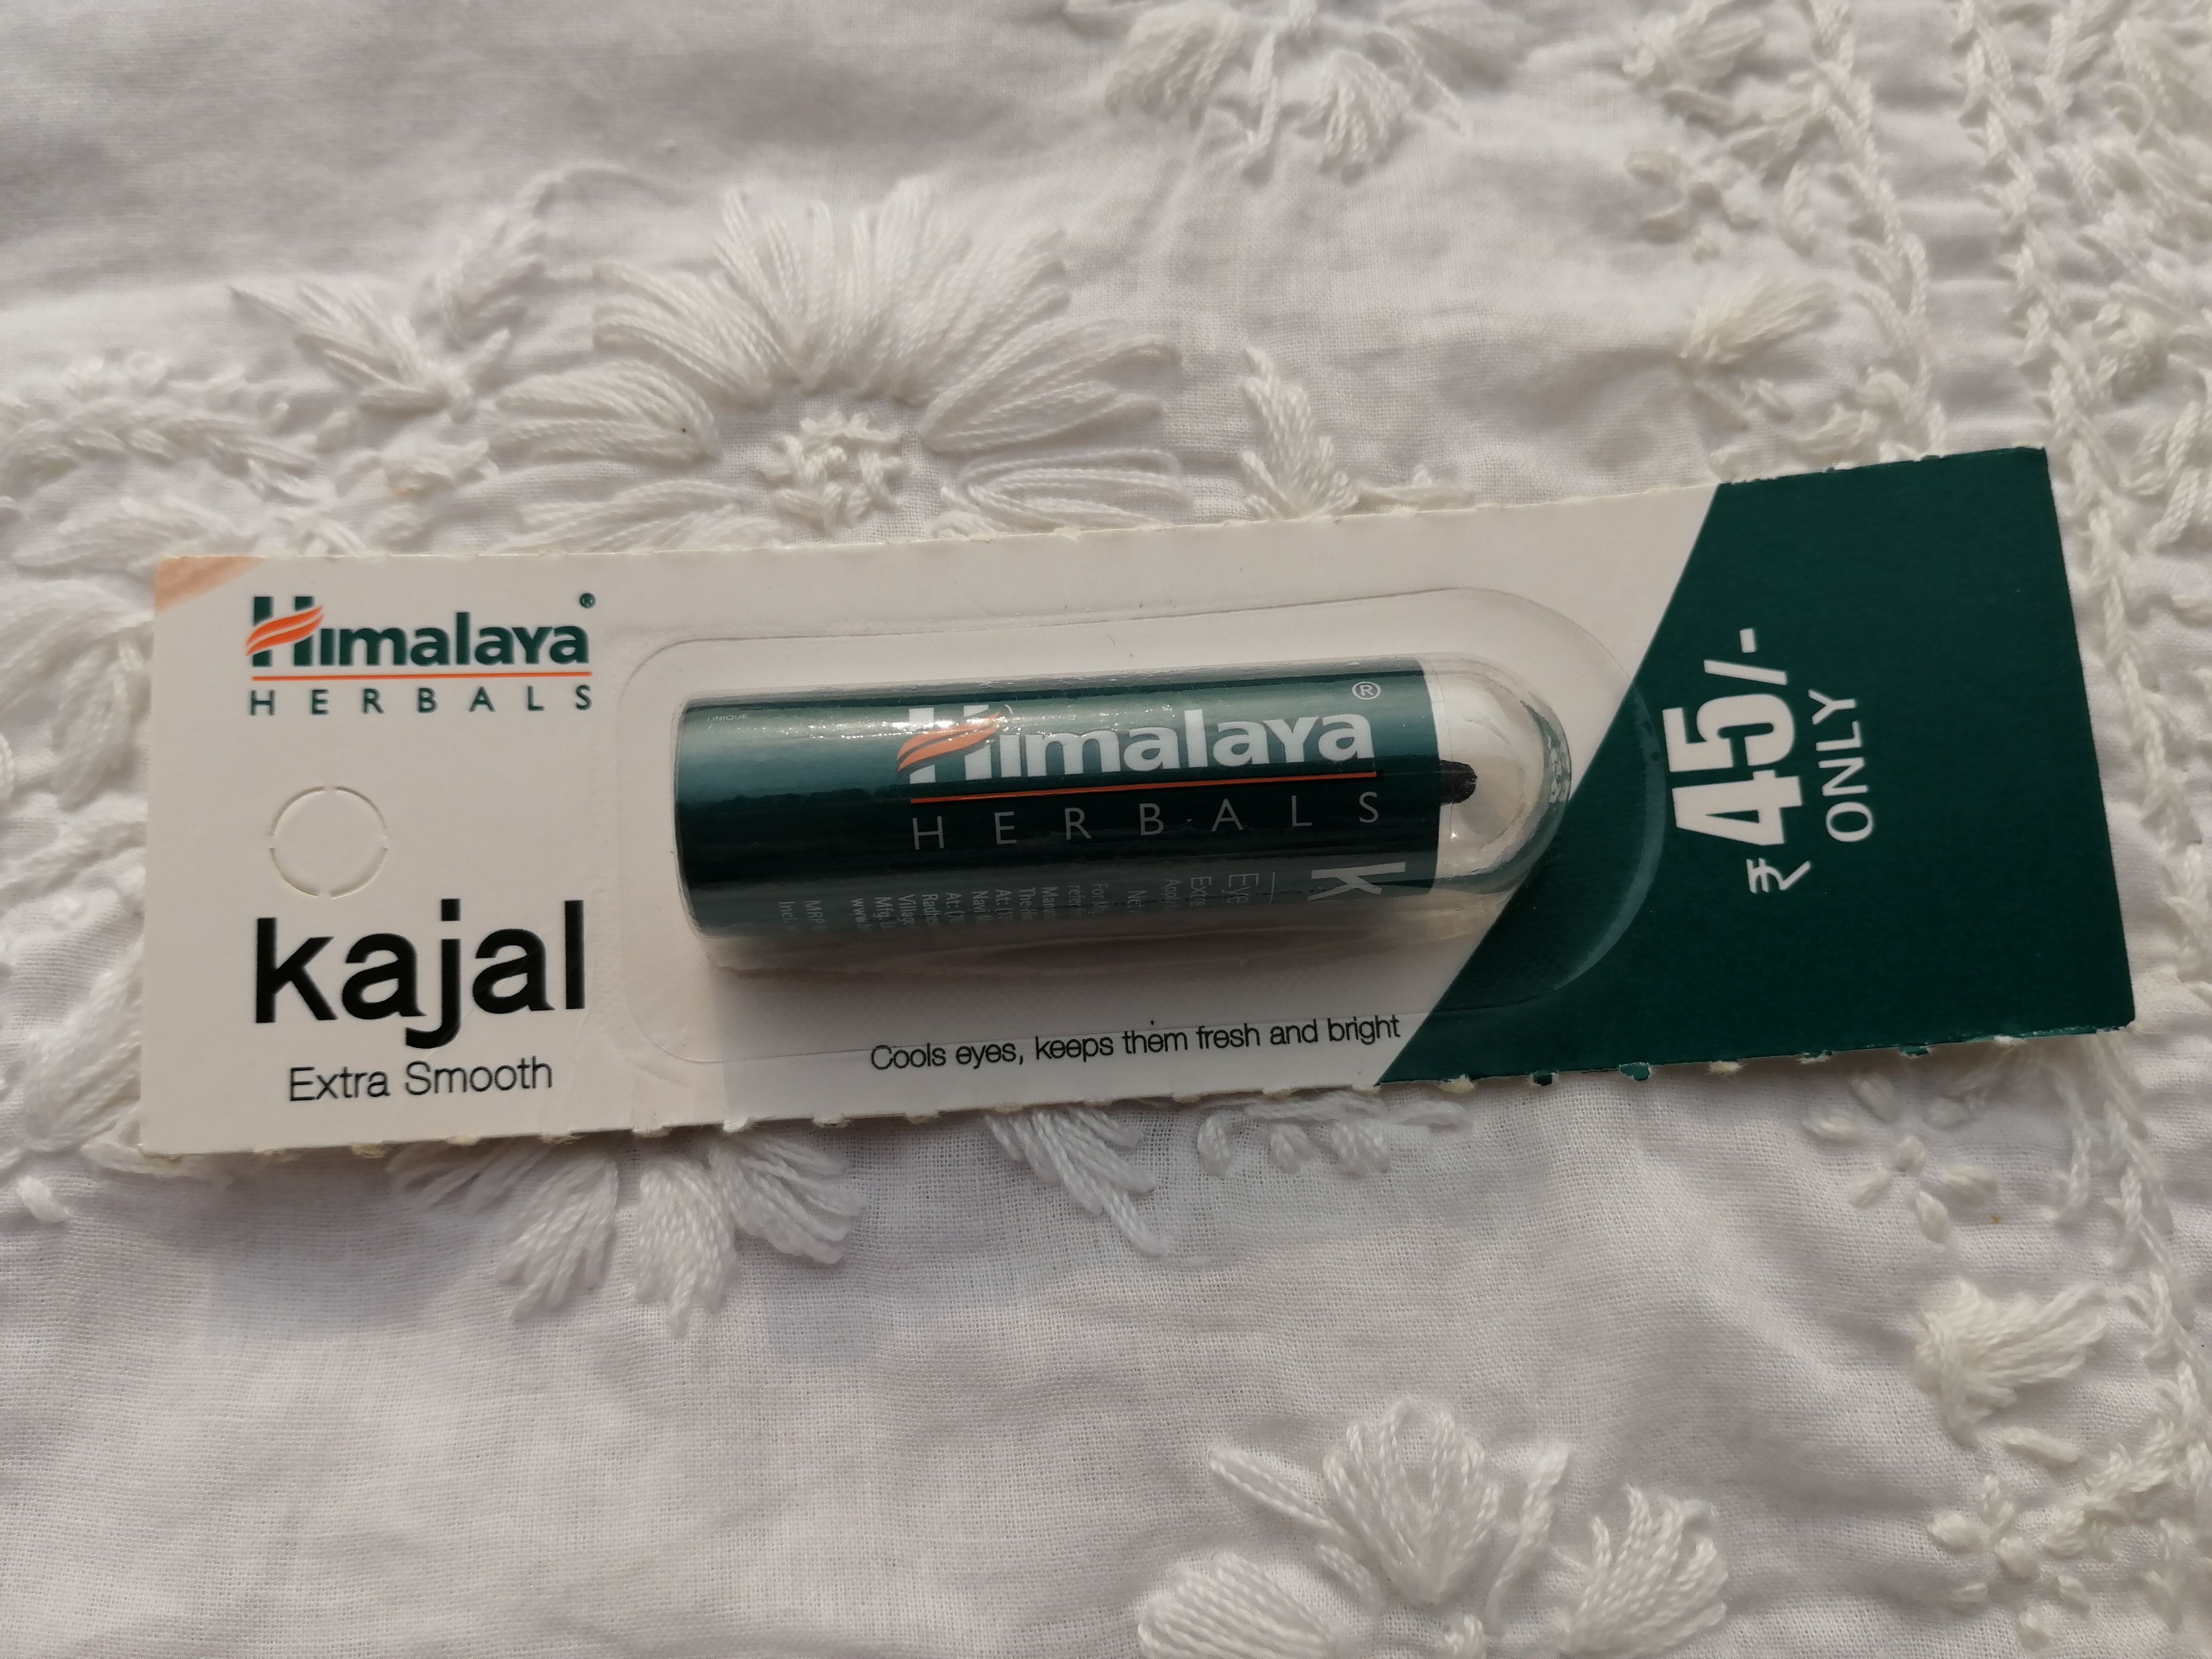 Himalaya Herbals Kajal| Review & Swatch